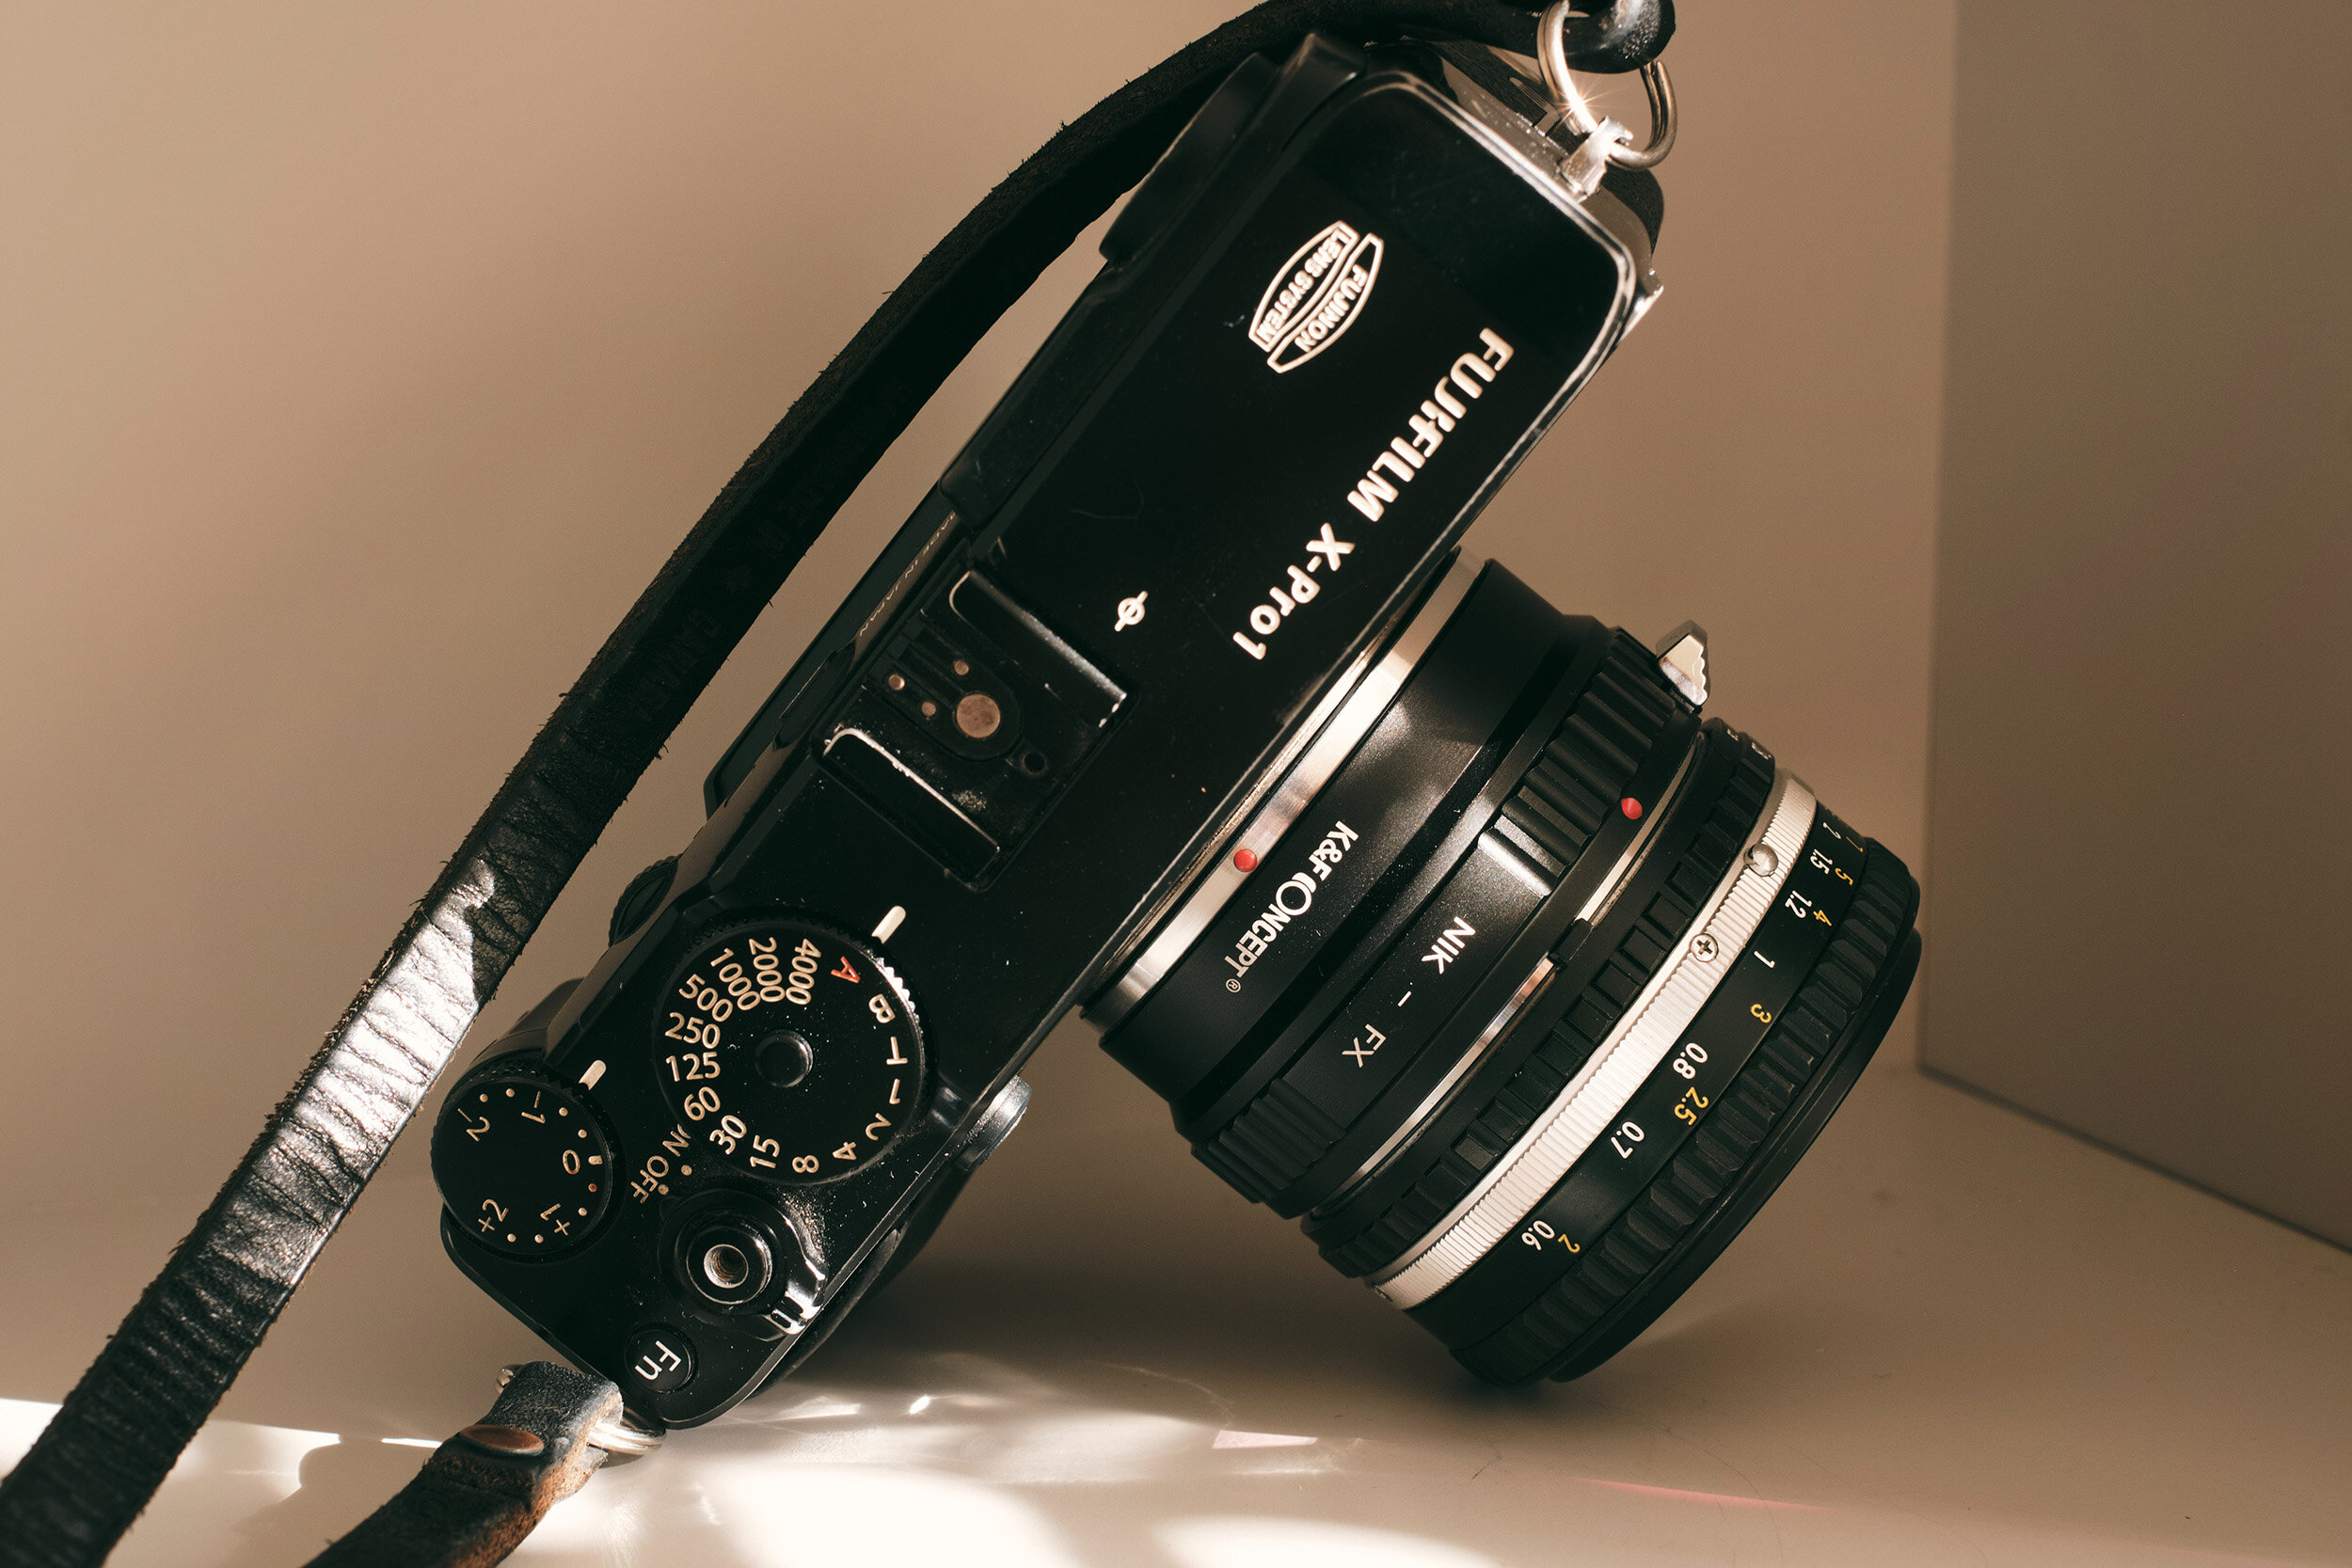 50mm for Fuji X | 5050 Travelog